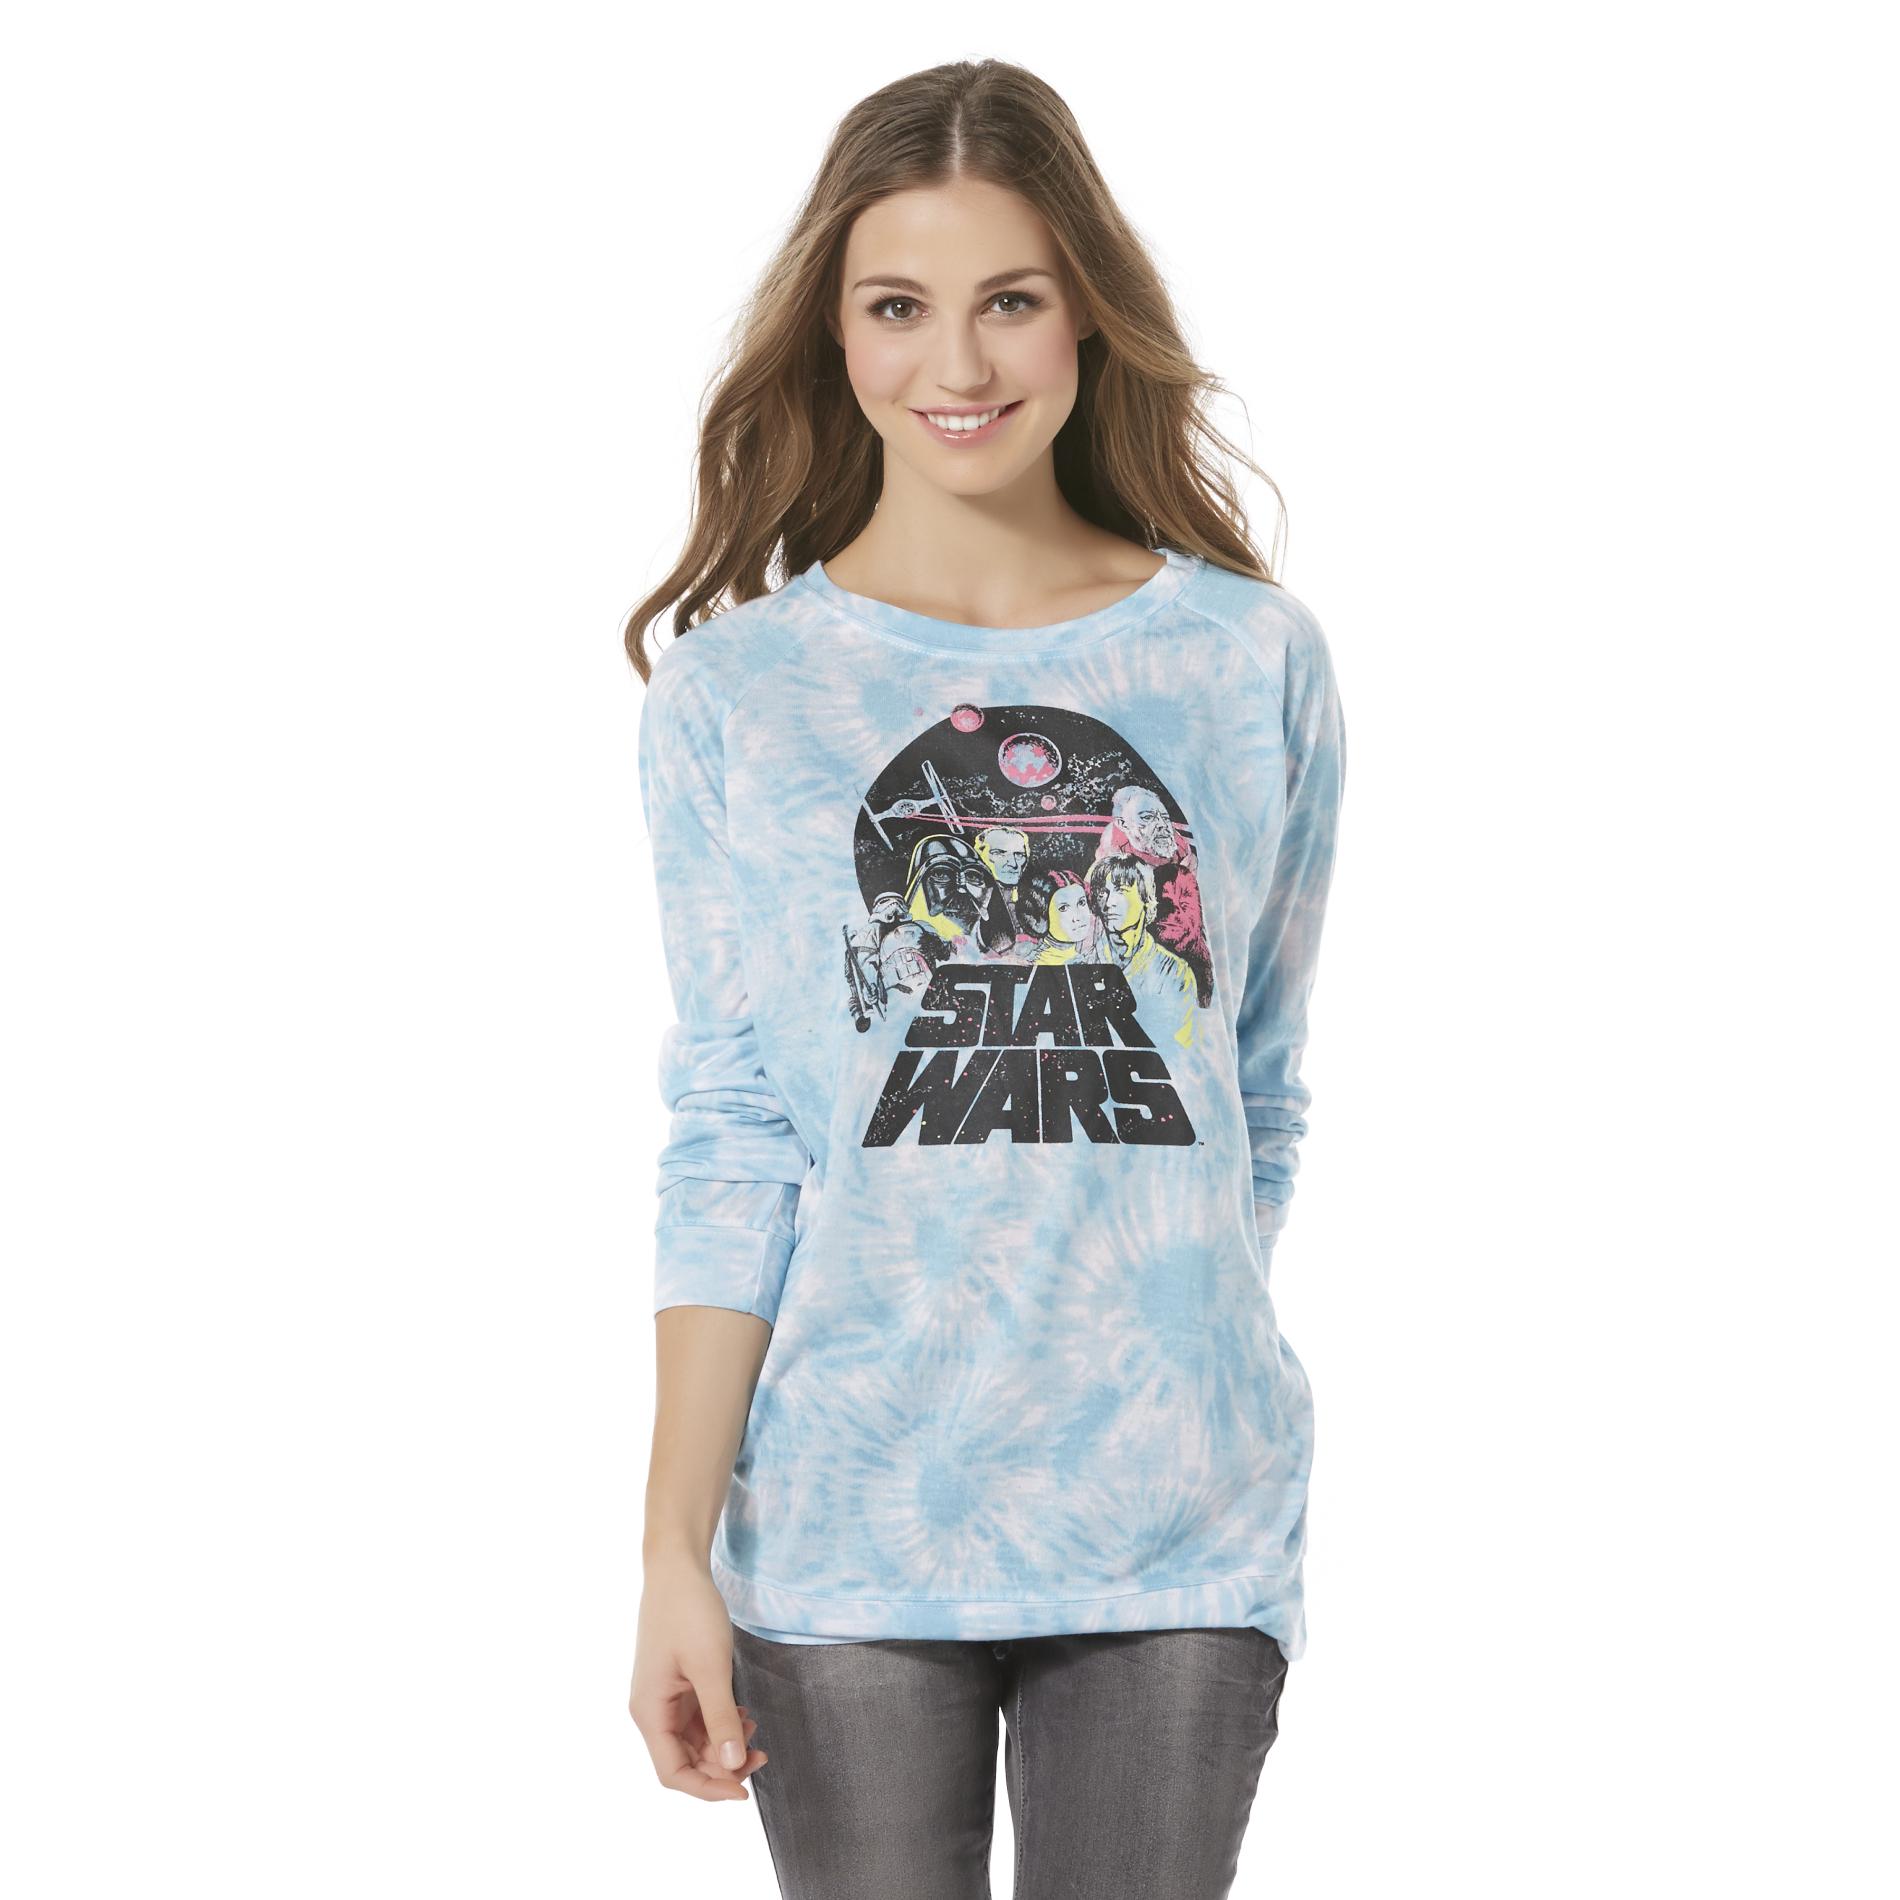 Star Wars Junior's Graphic T-Shirt